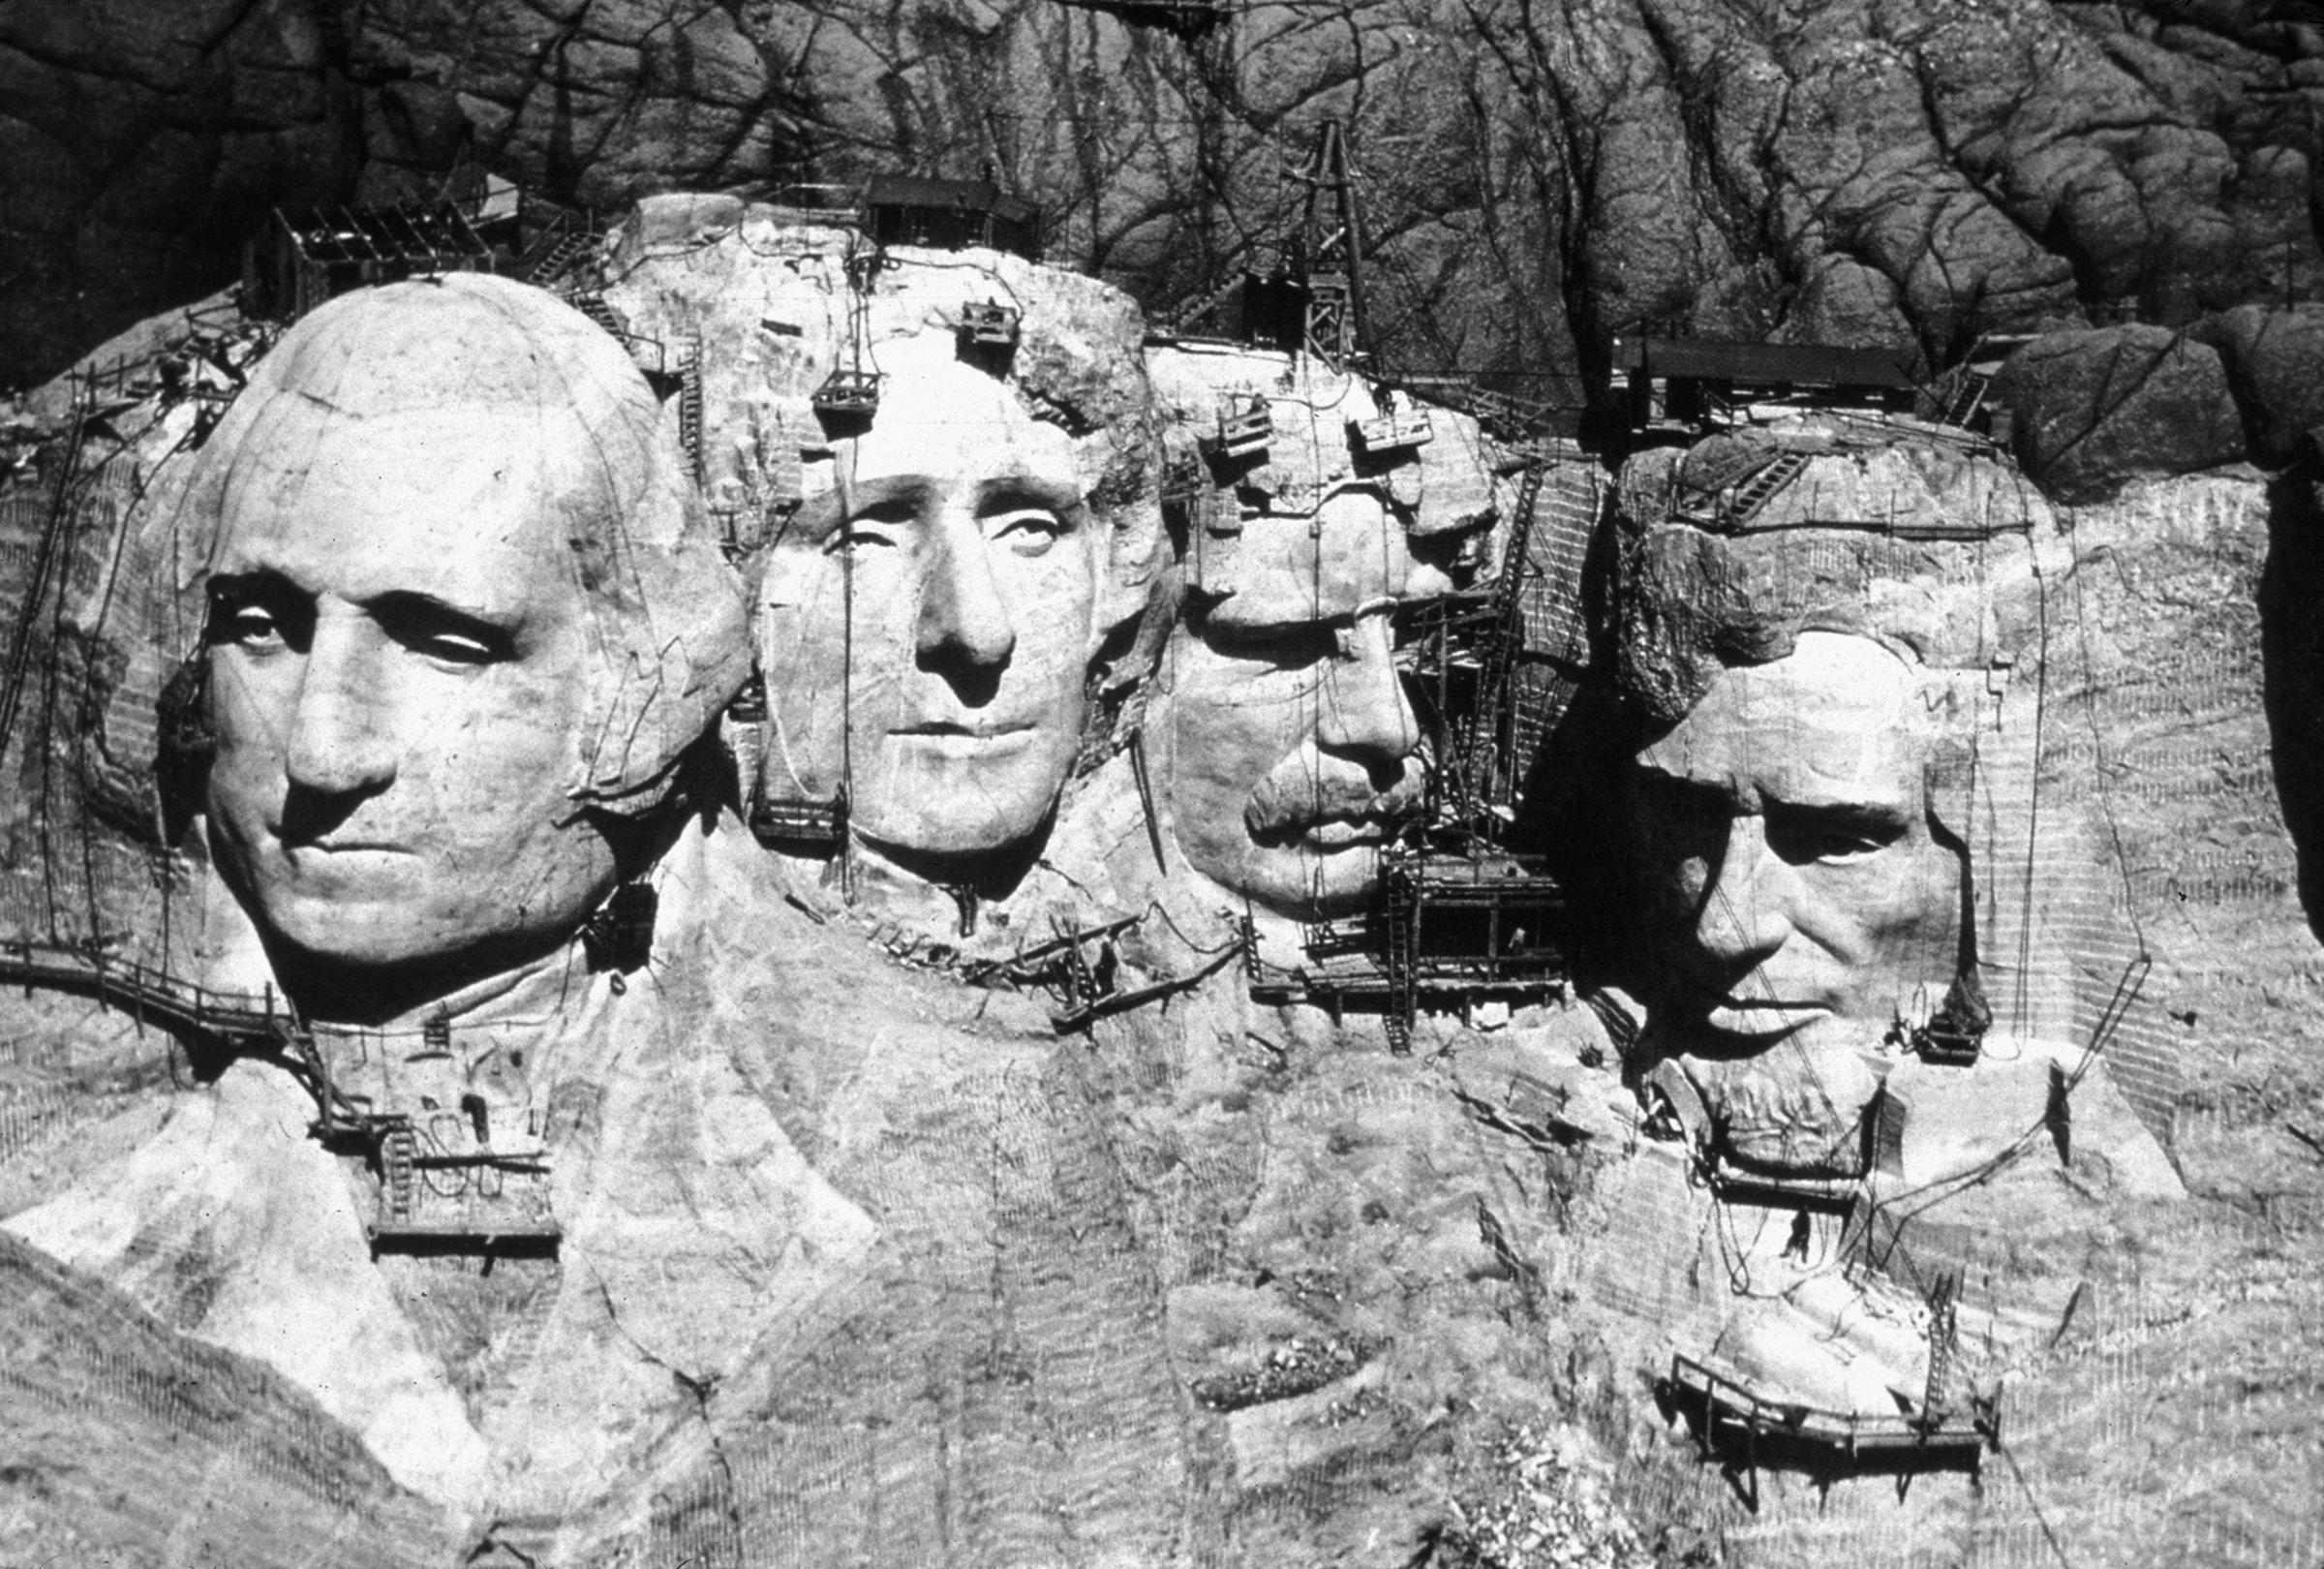 The memorial at Mount Rushmore under construction circa 1941.